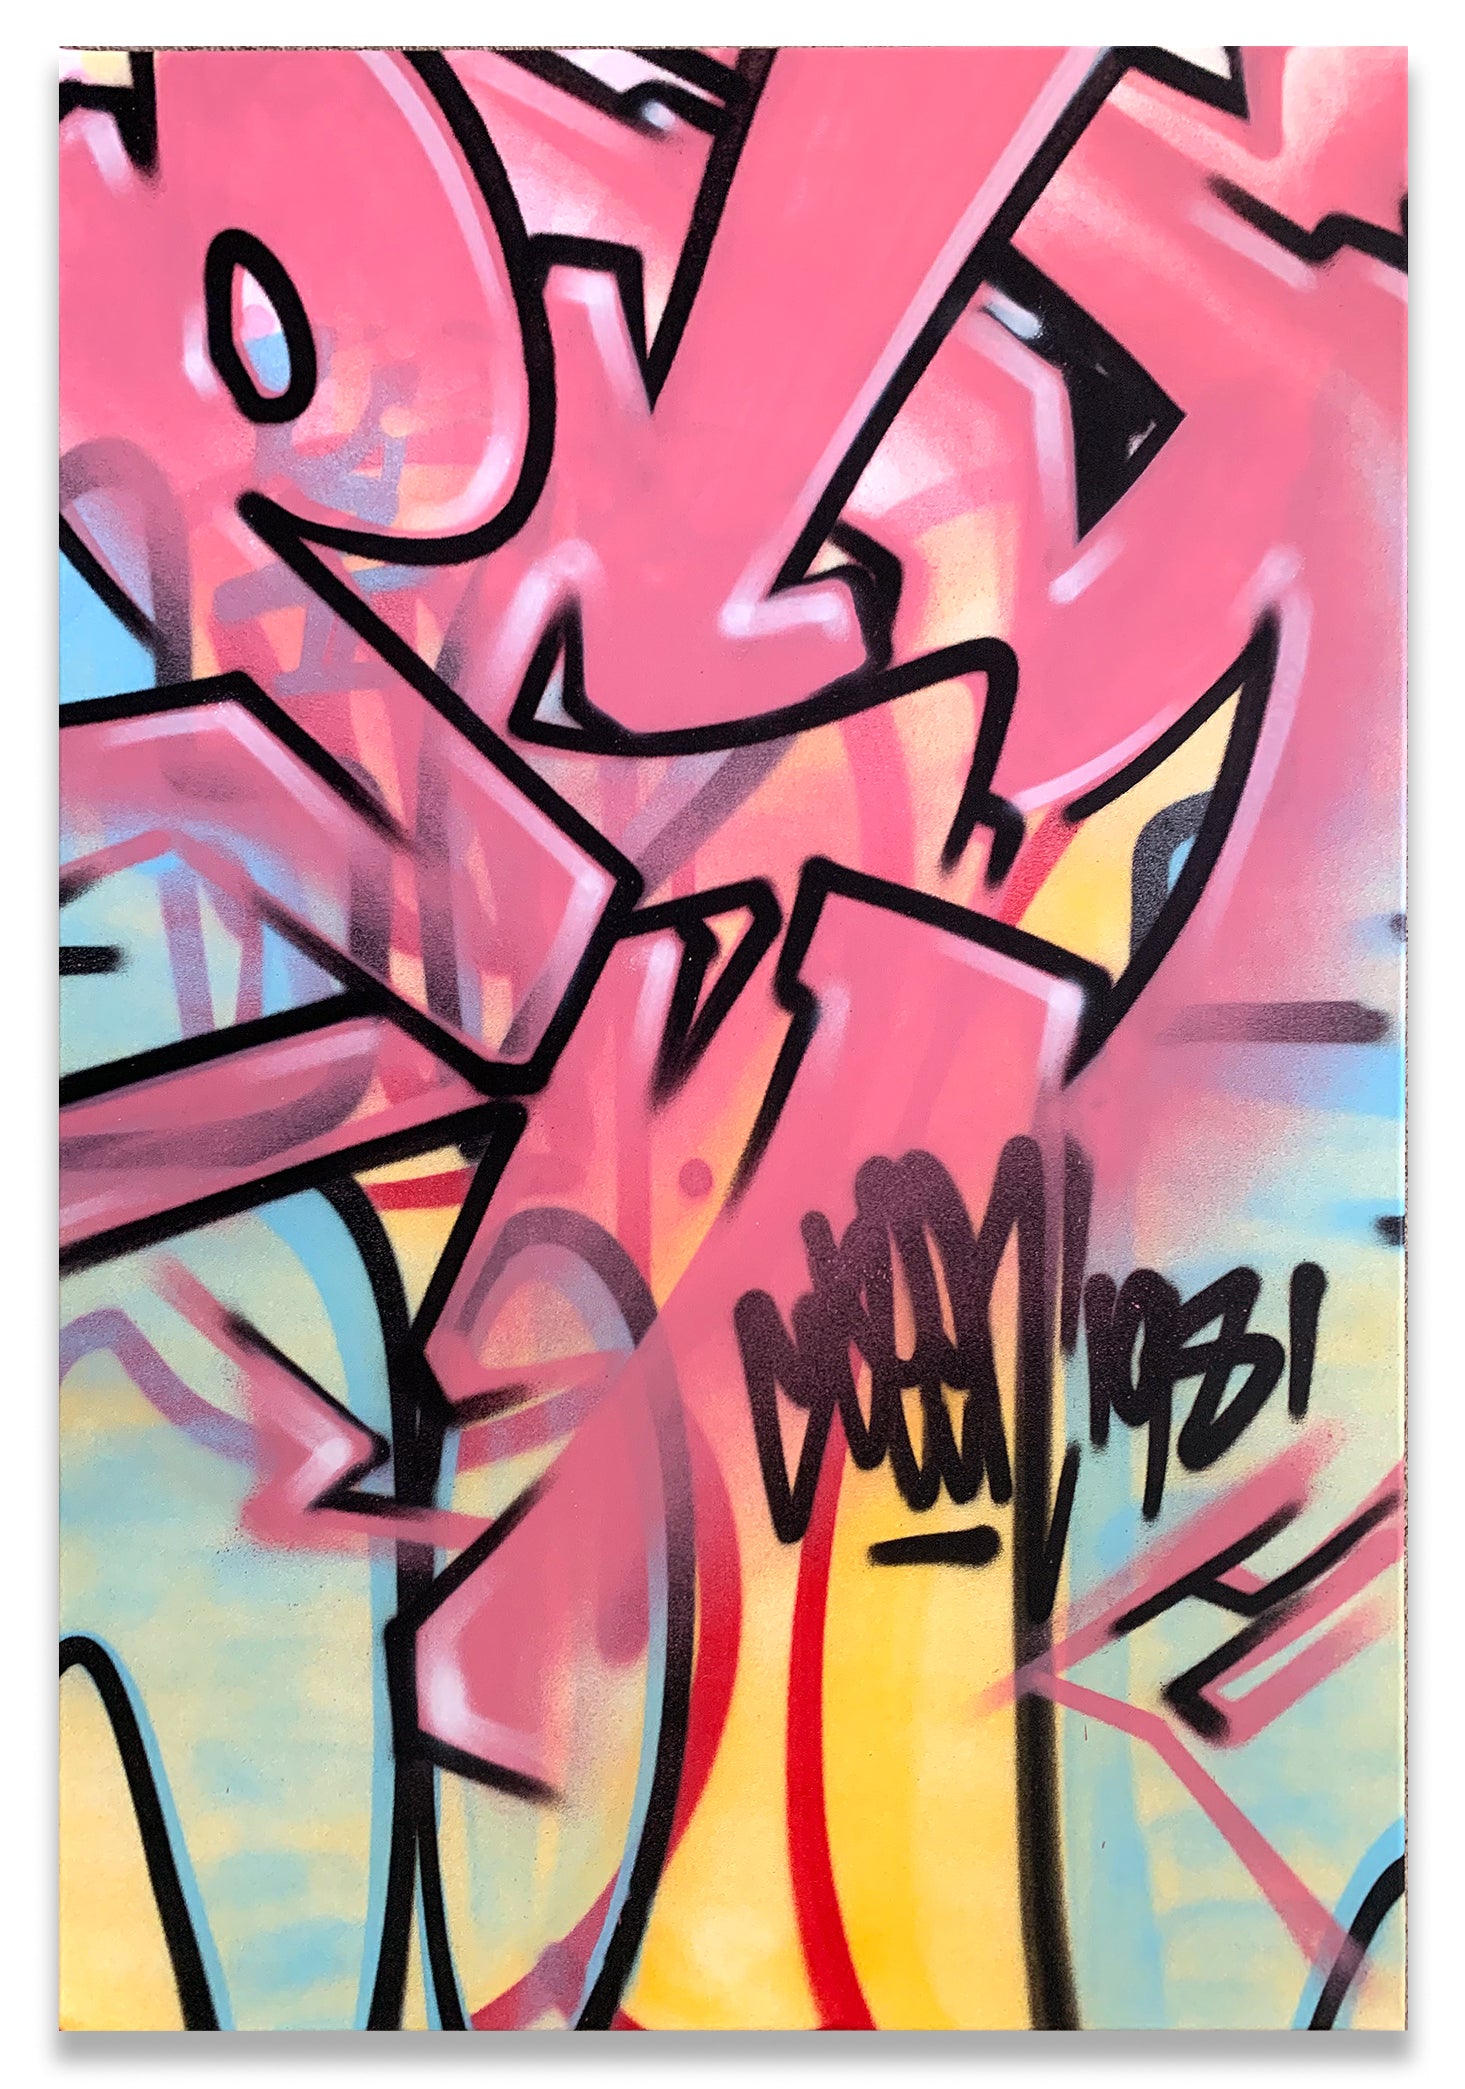 GRAFFITI ARTIST SEEN -"Psycho 1981" Aerosol on Canvas